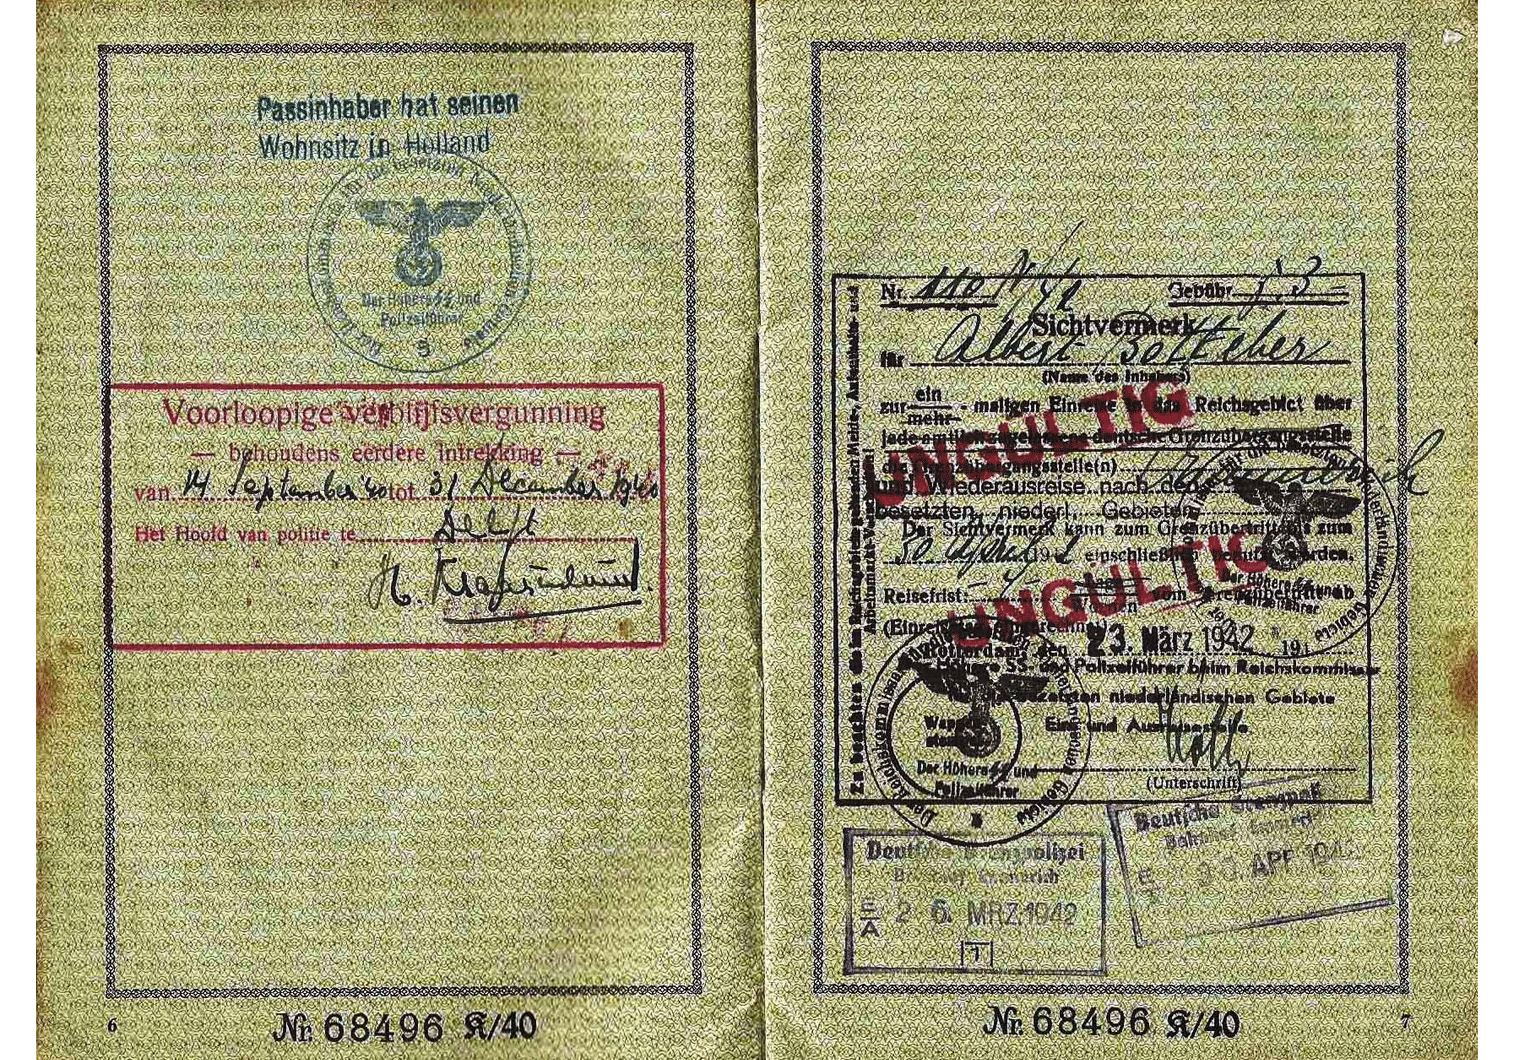 SS issued WW2 German passport